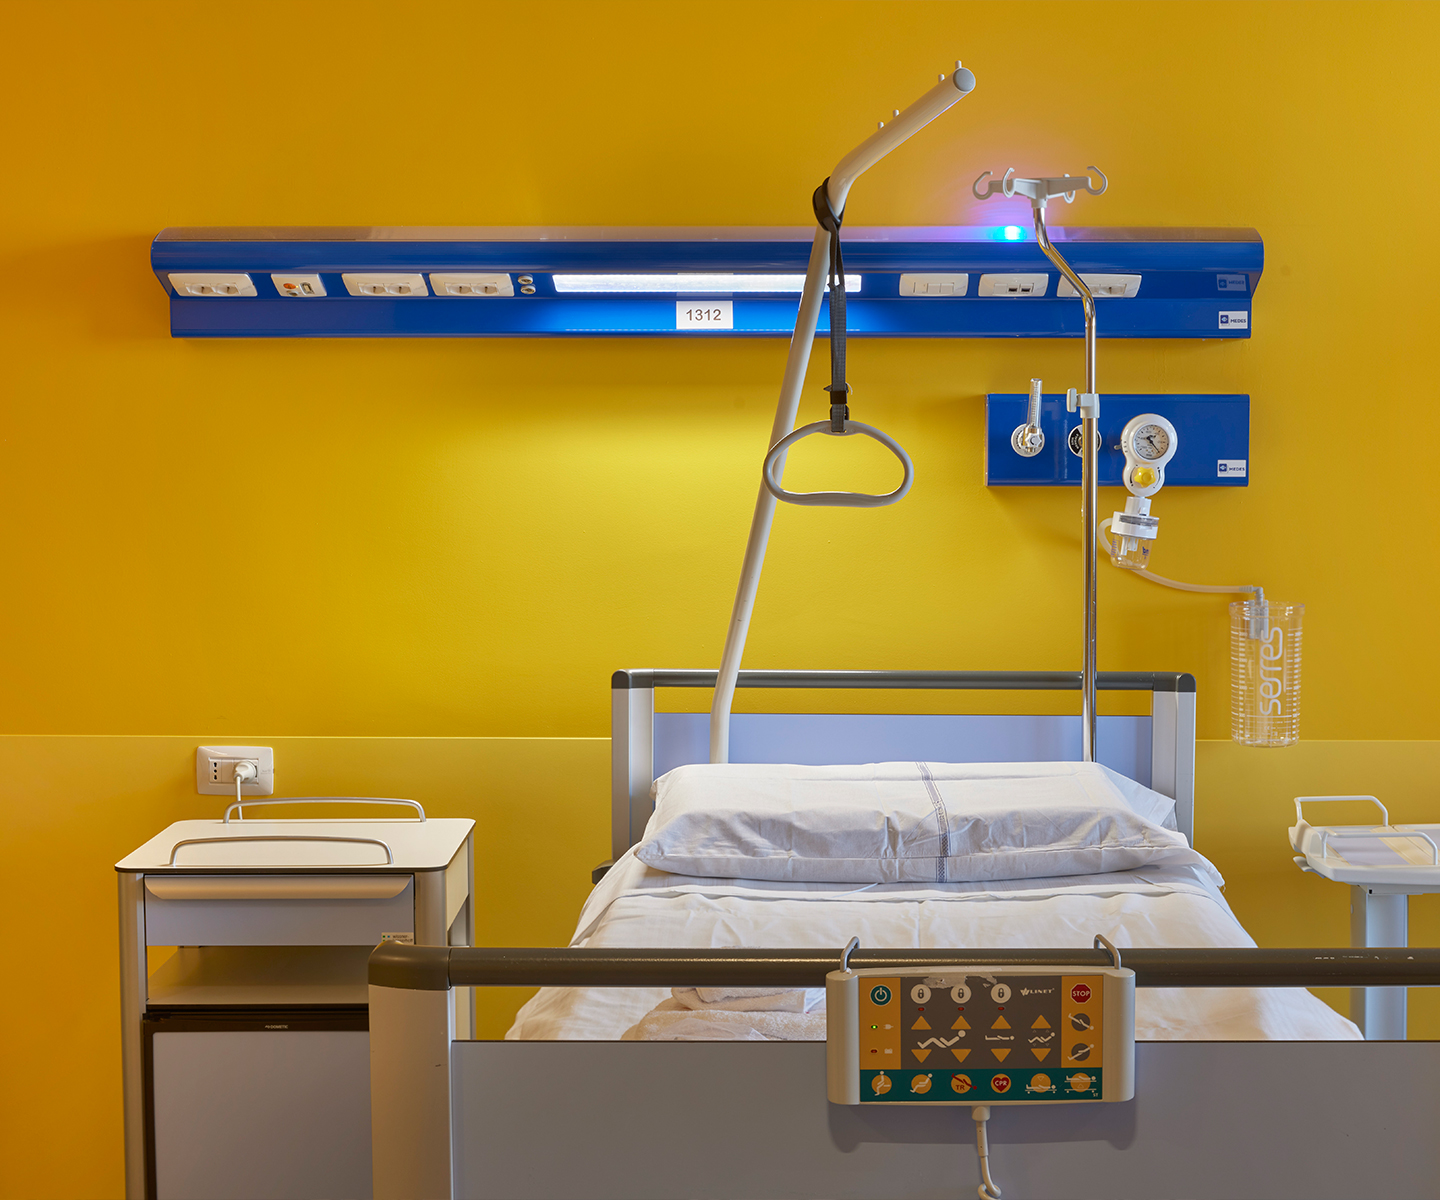 Antibacterial Gewiss Chorusmart sockets installed in a room at Galeazzi-Sant'Ambrogio Hospital.